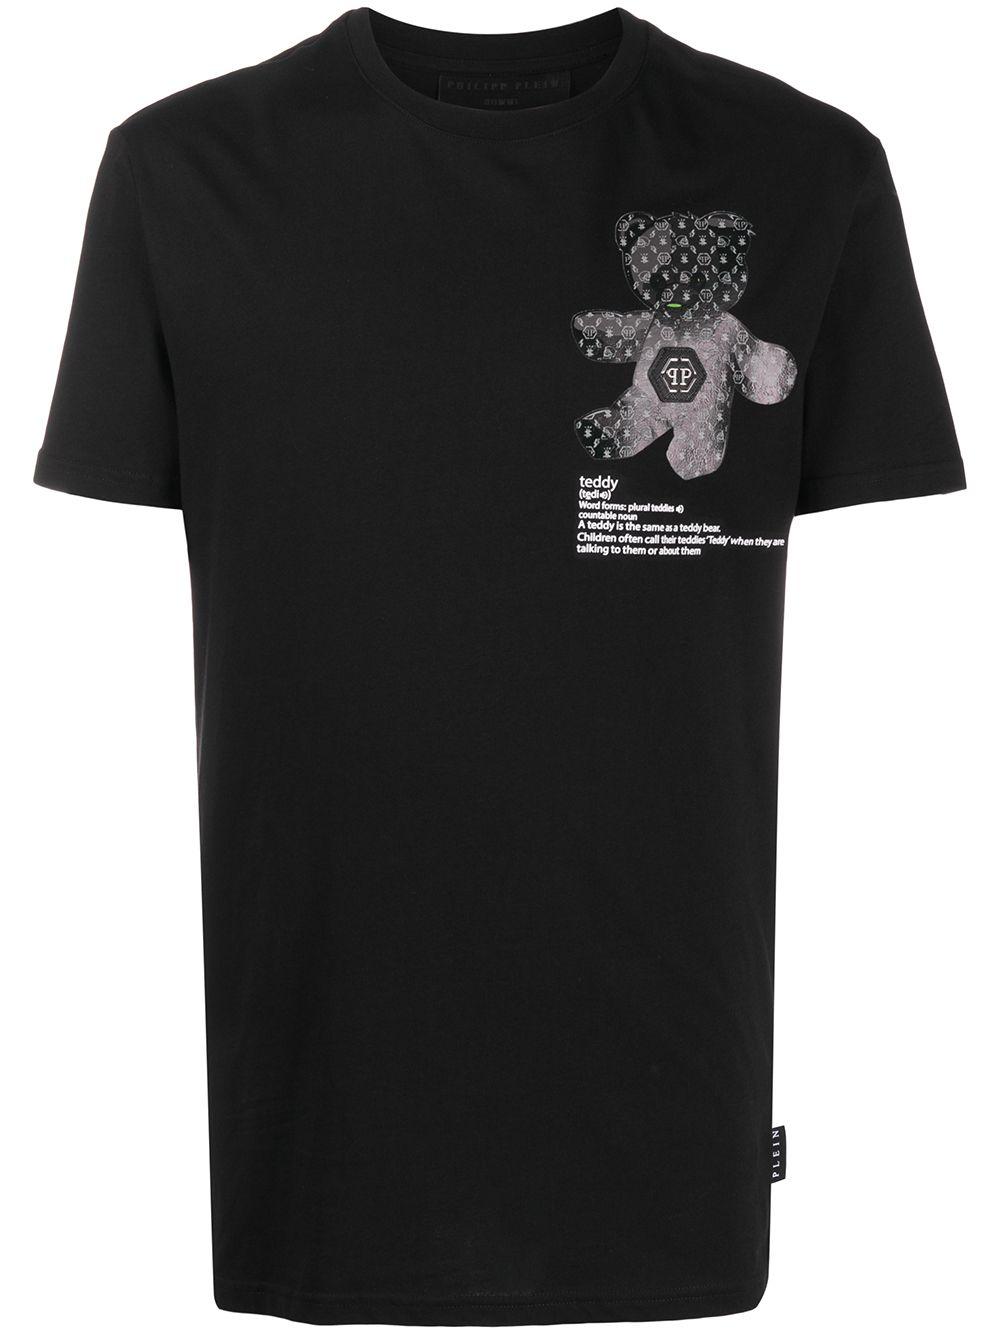 Philipp Plein Cotton Teddy Bear Crew Neck T-shirt in Black for Men - Lyst